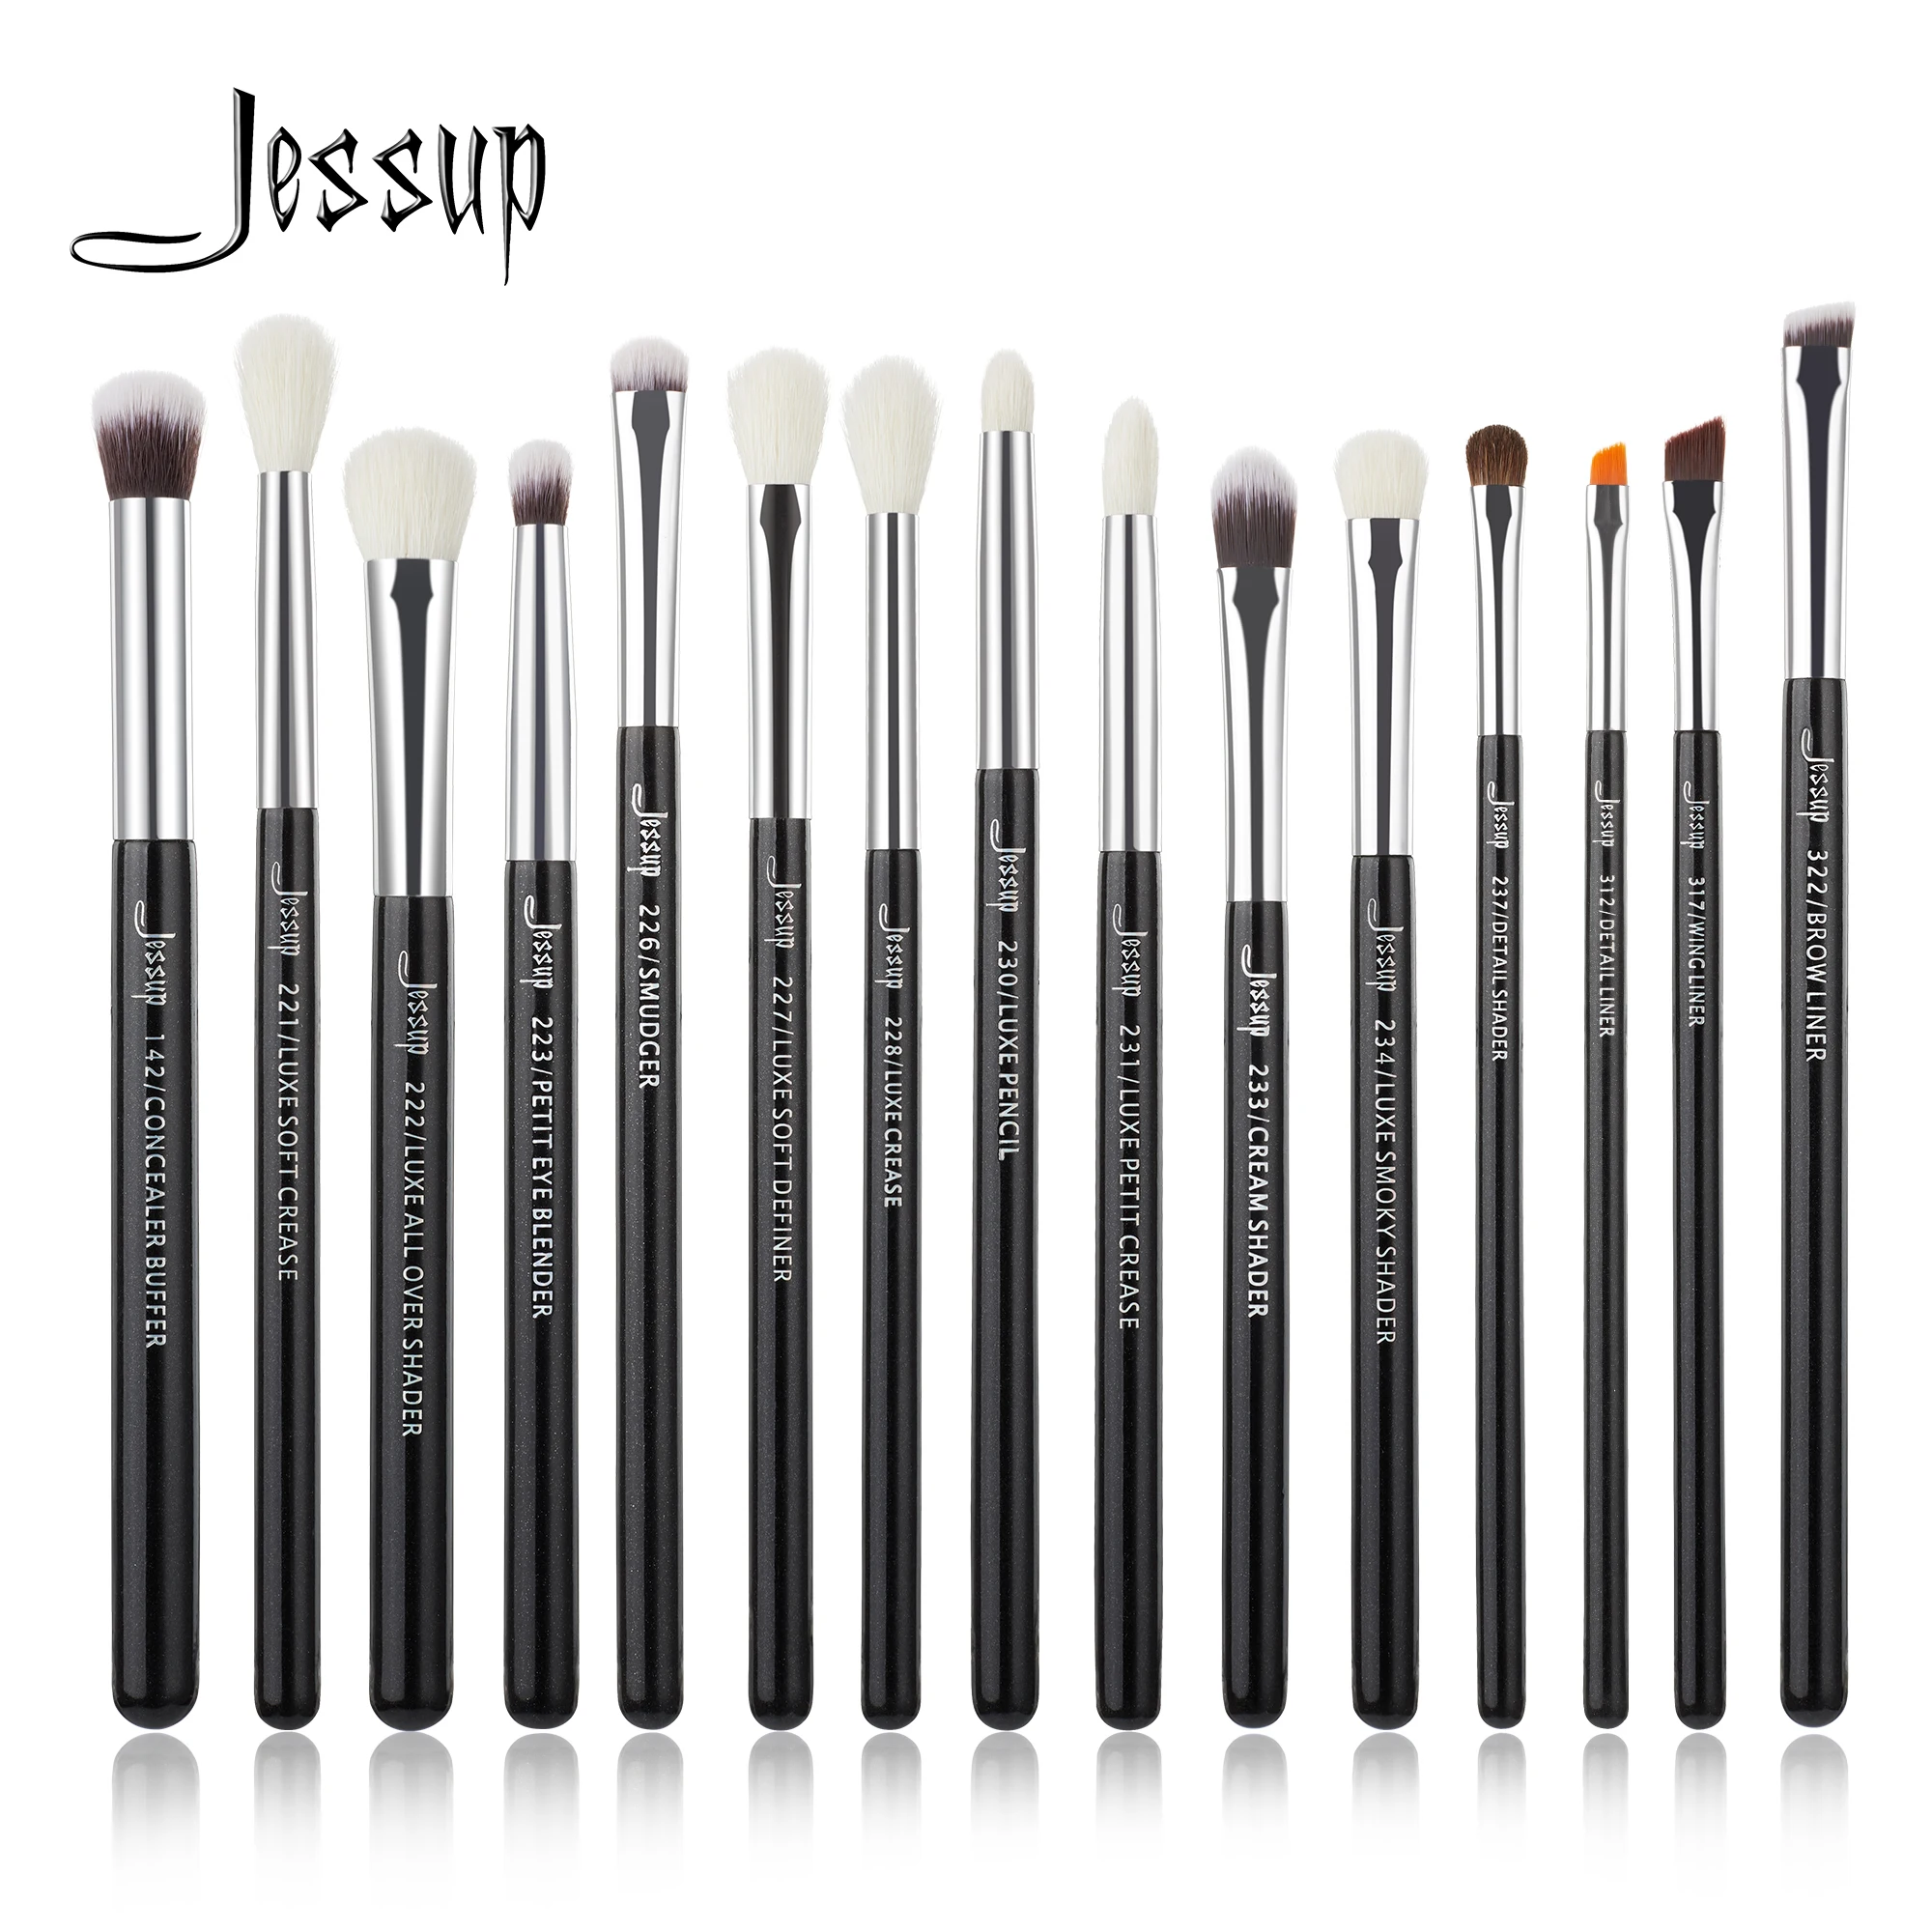 Jessup Makeup Brushes Set Eyeshadow Eye Blending Brow Liner Concealer Brush 15pcs Black/Silver Shader Synthetic Goat Hair 1